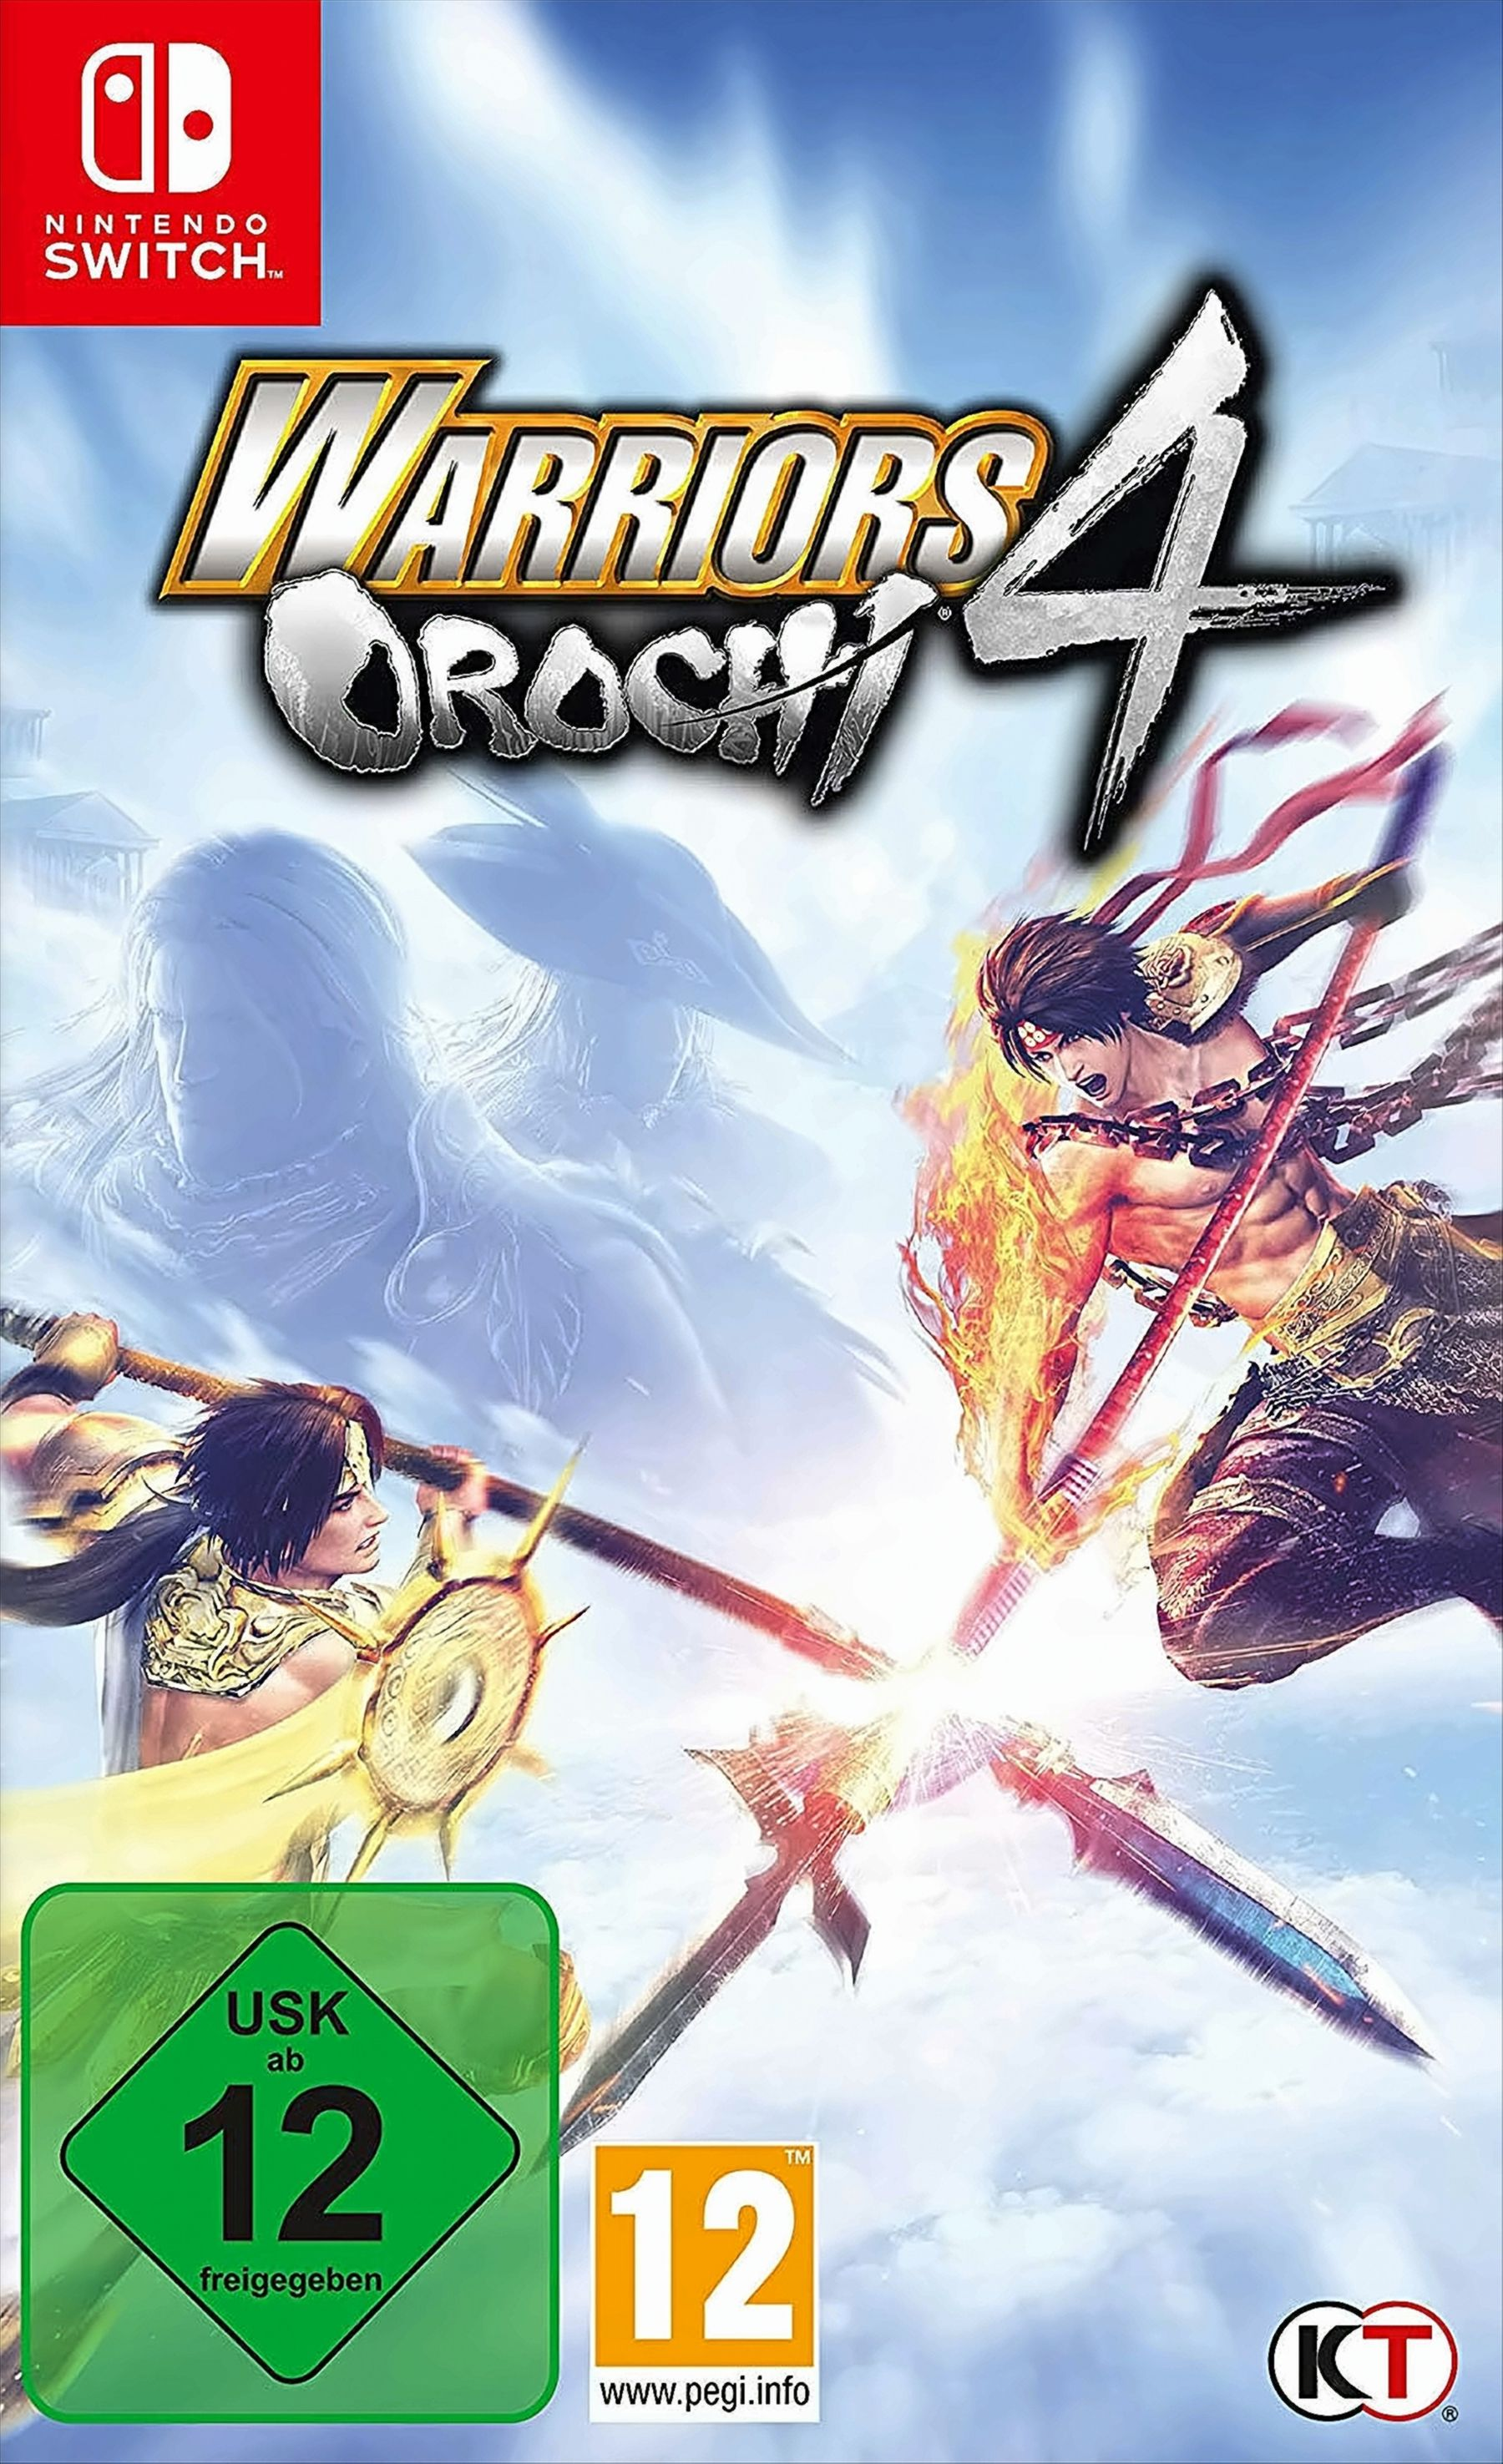 Switch] Warriors (Switch) Orochi 4 - [Nintendo